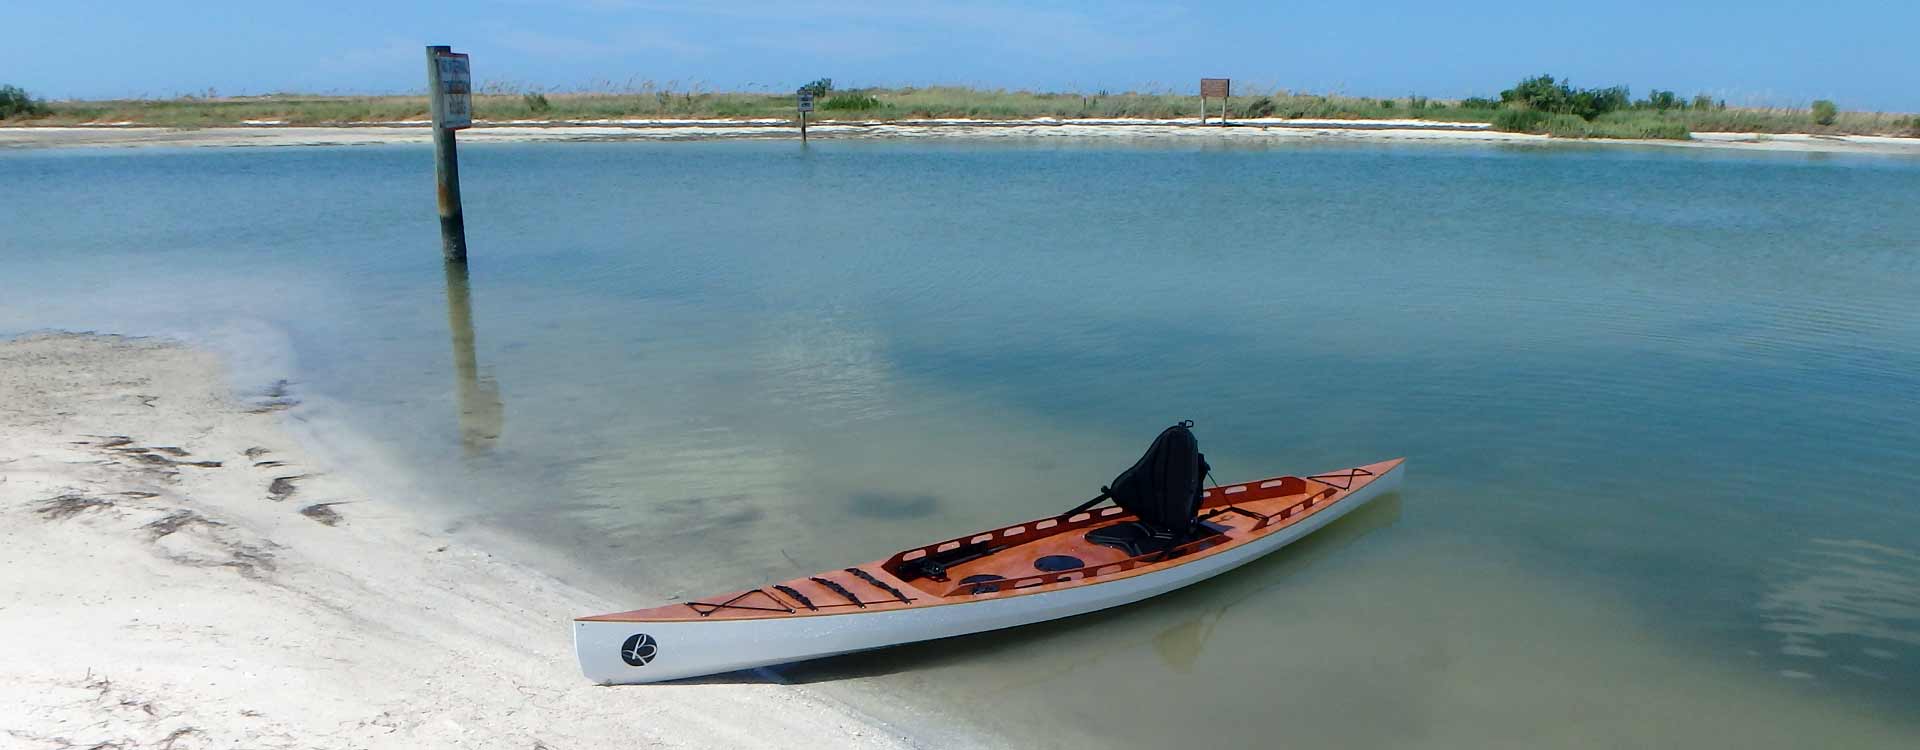 Fishing Yak wooden stitch&glue Bedard Yacht Design SOT kayak